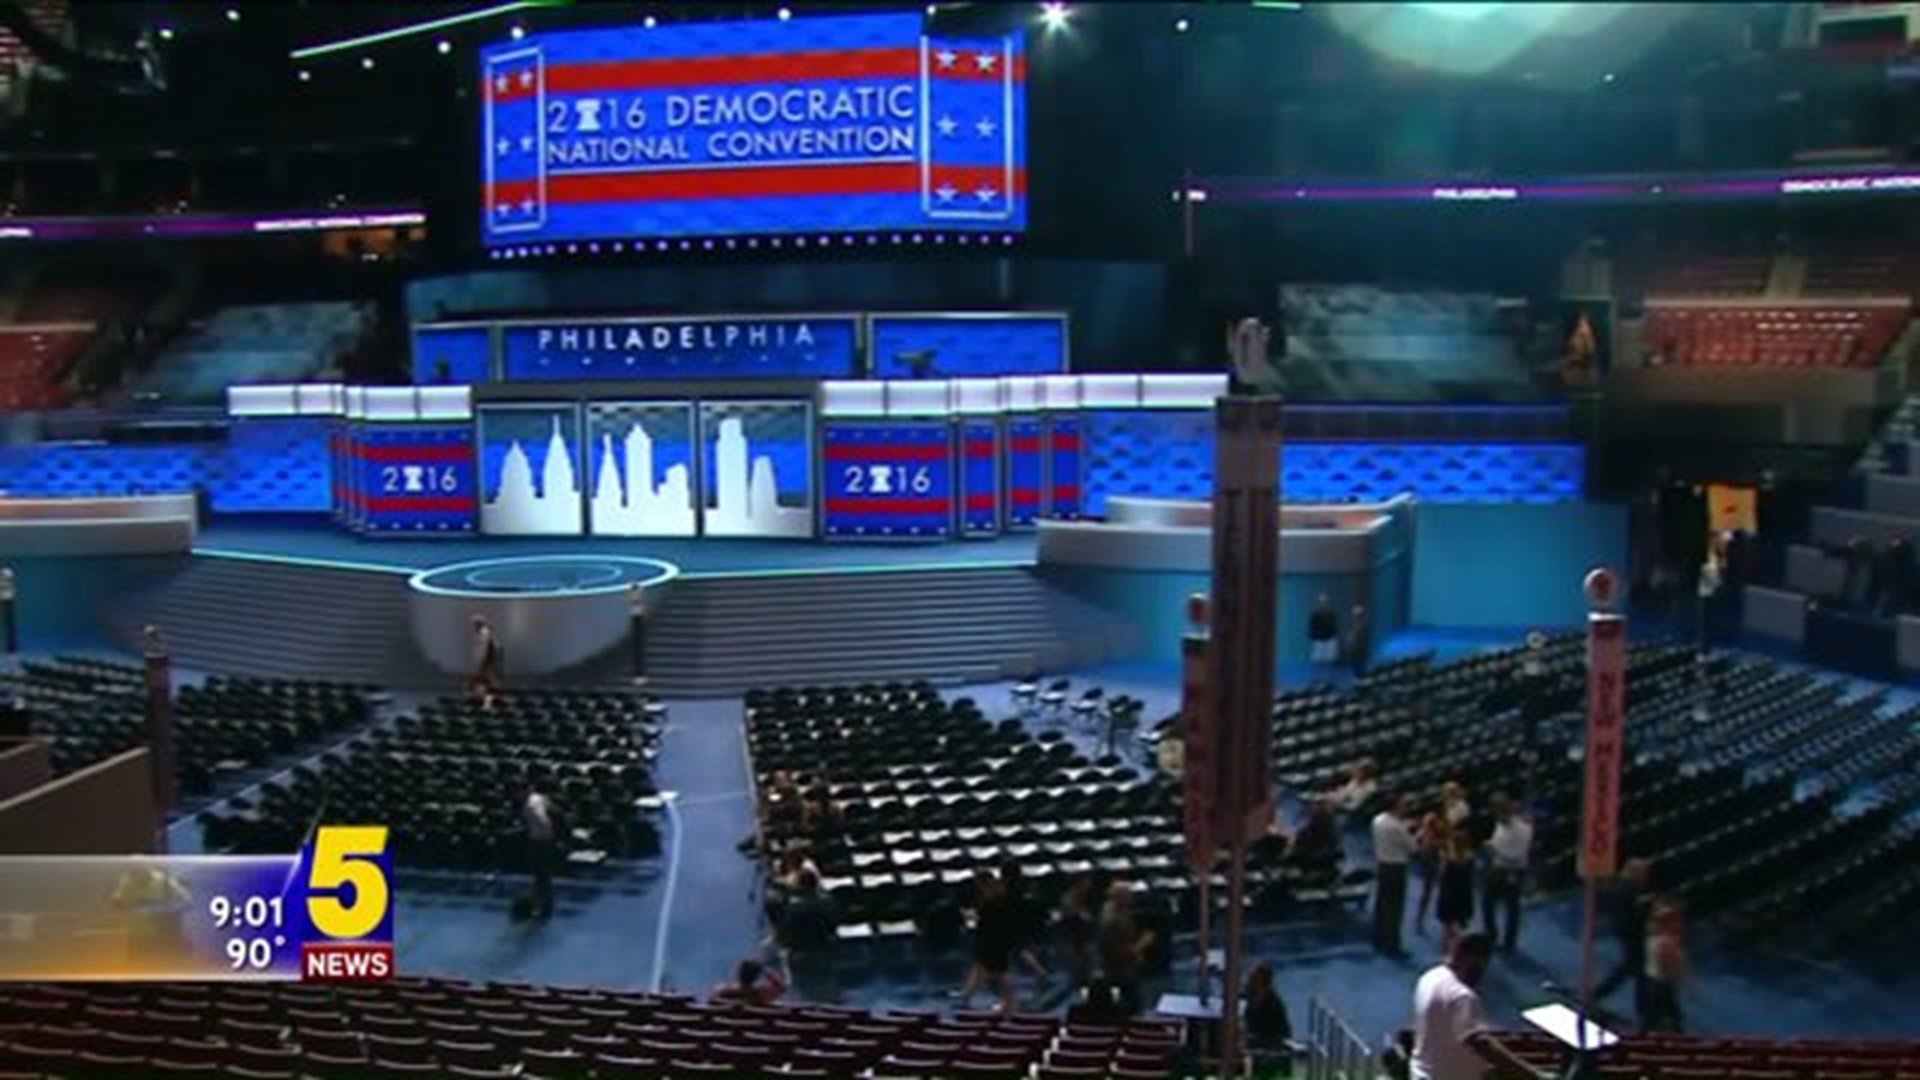 Democrats Anticipate Convention